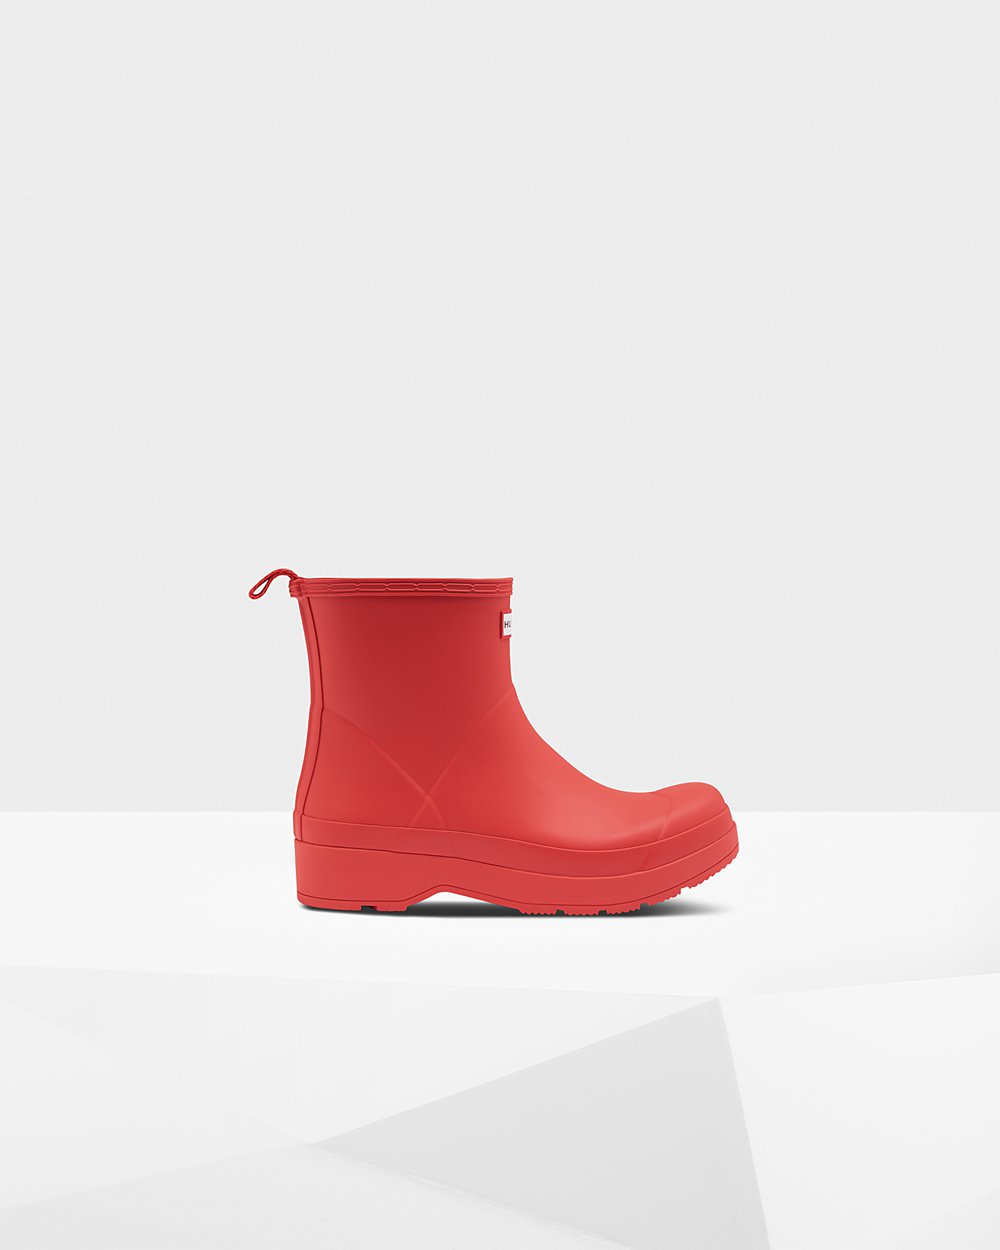 Mens Play Boots - Hunter Original Short Rain (42WEQZHTK) - Red